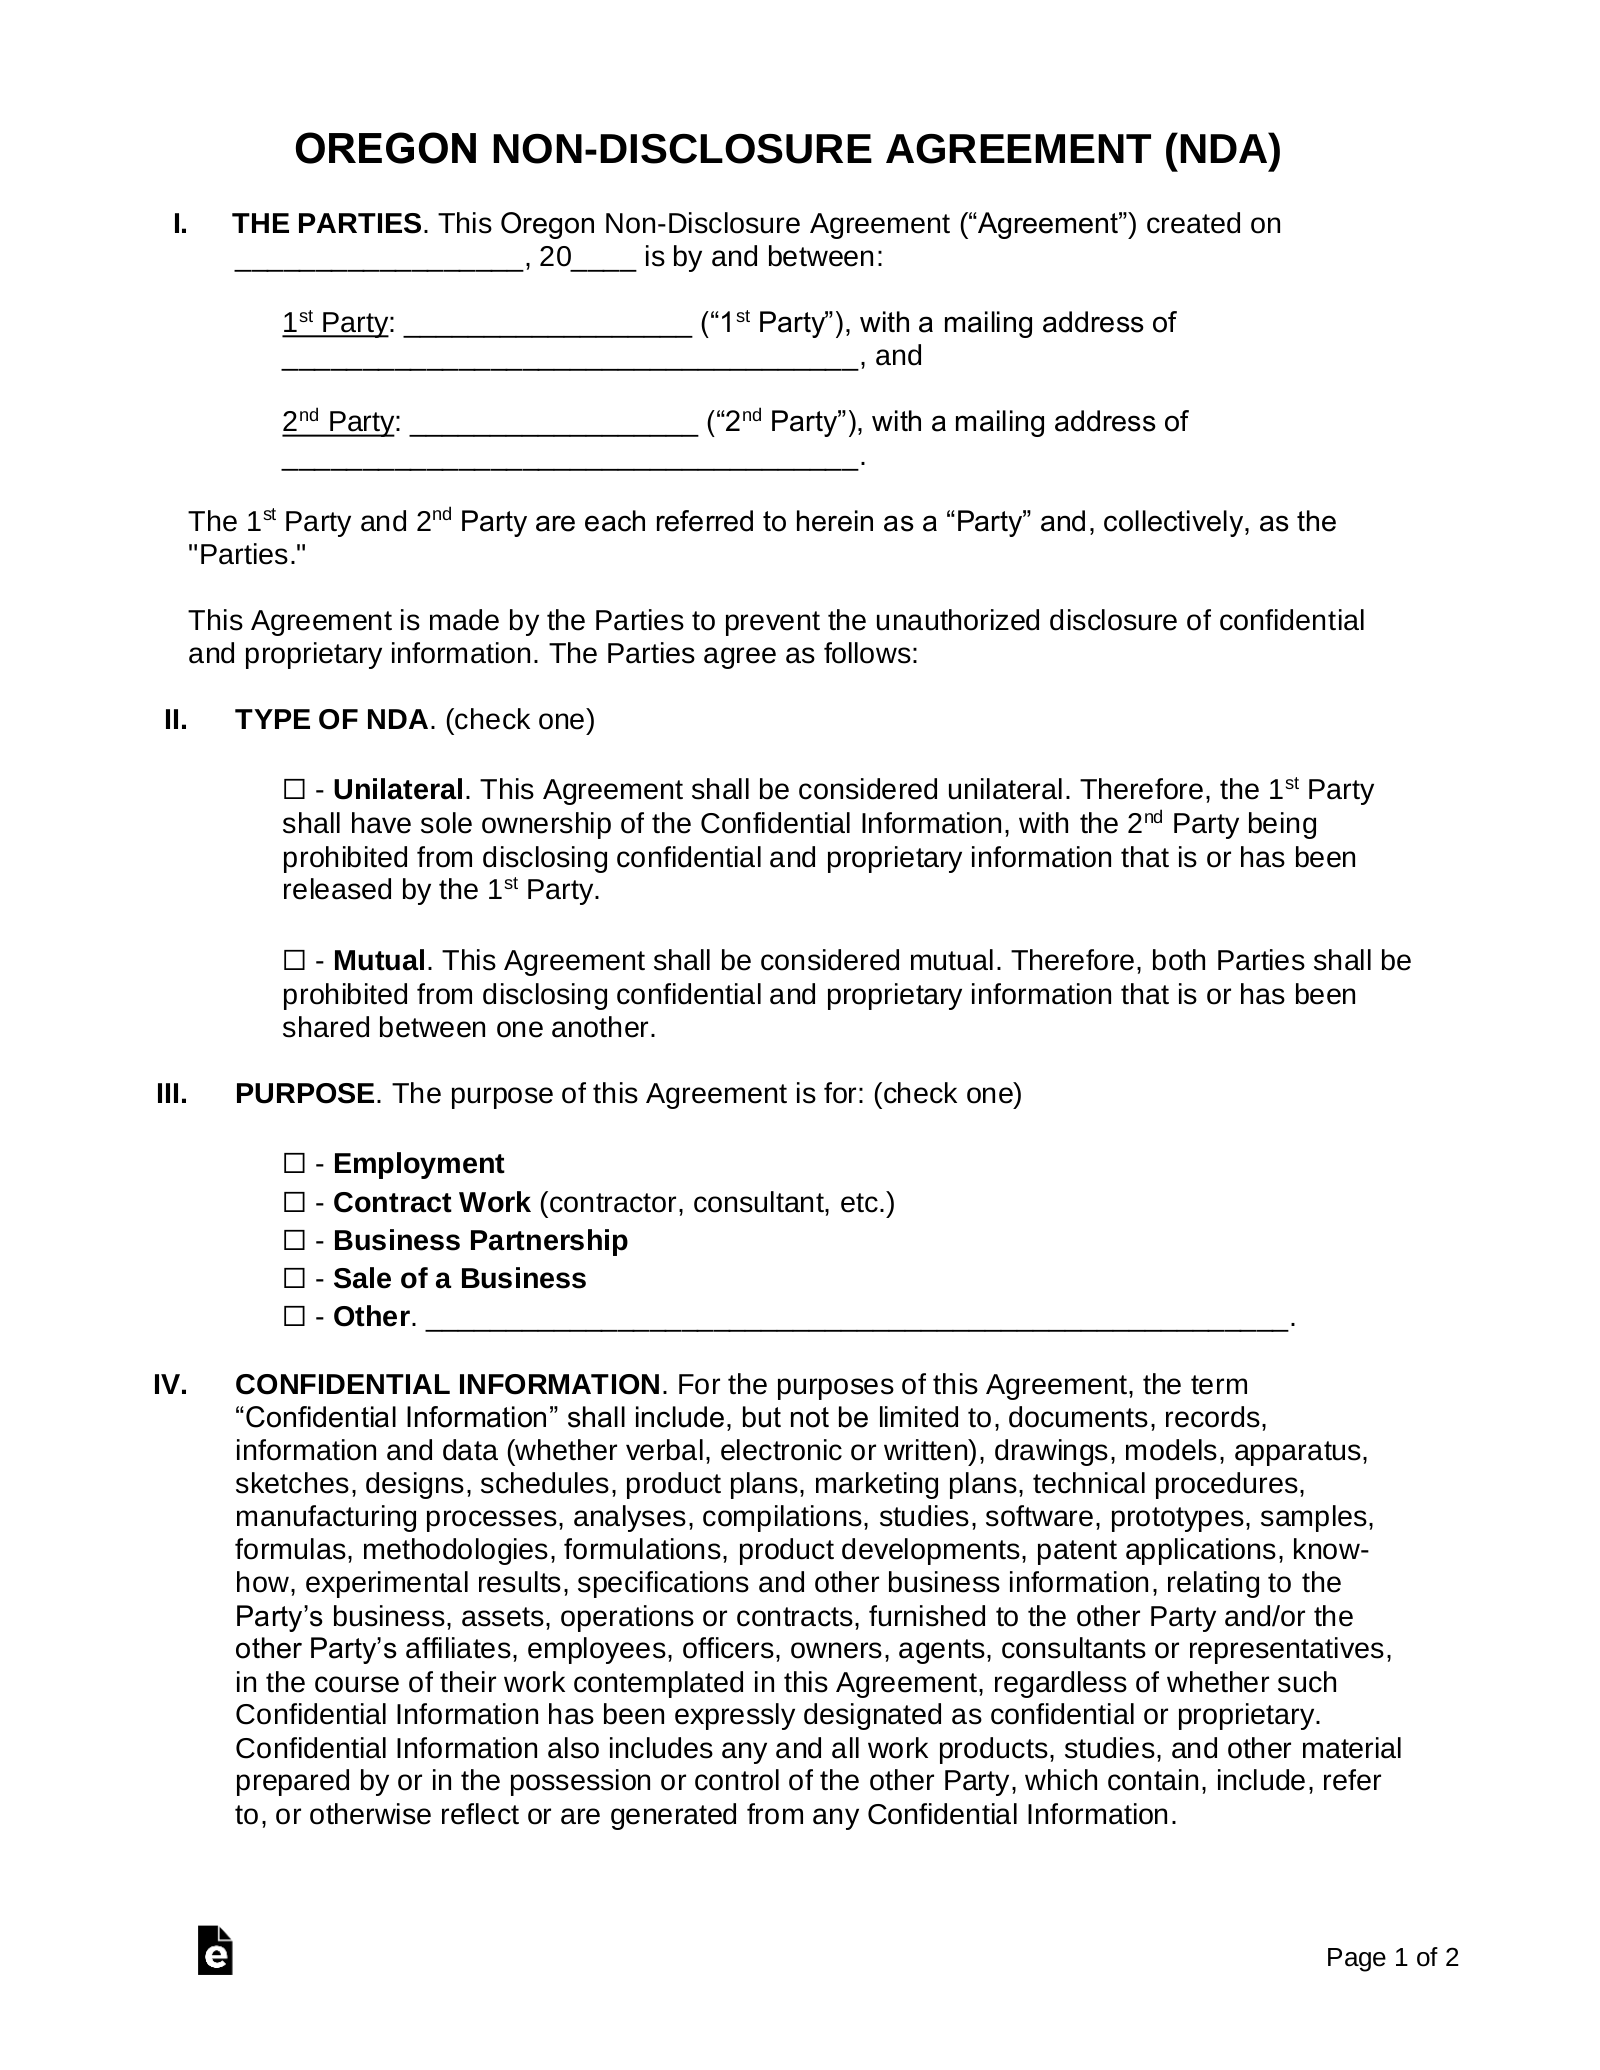 Oregon Non-Disclosure Agreement (NDA) Template